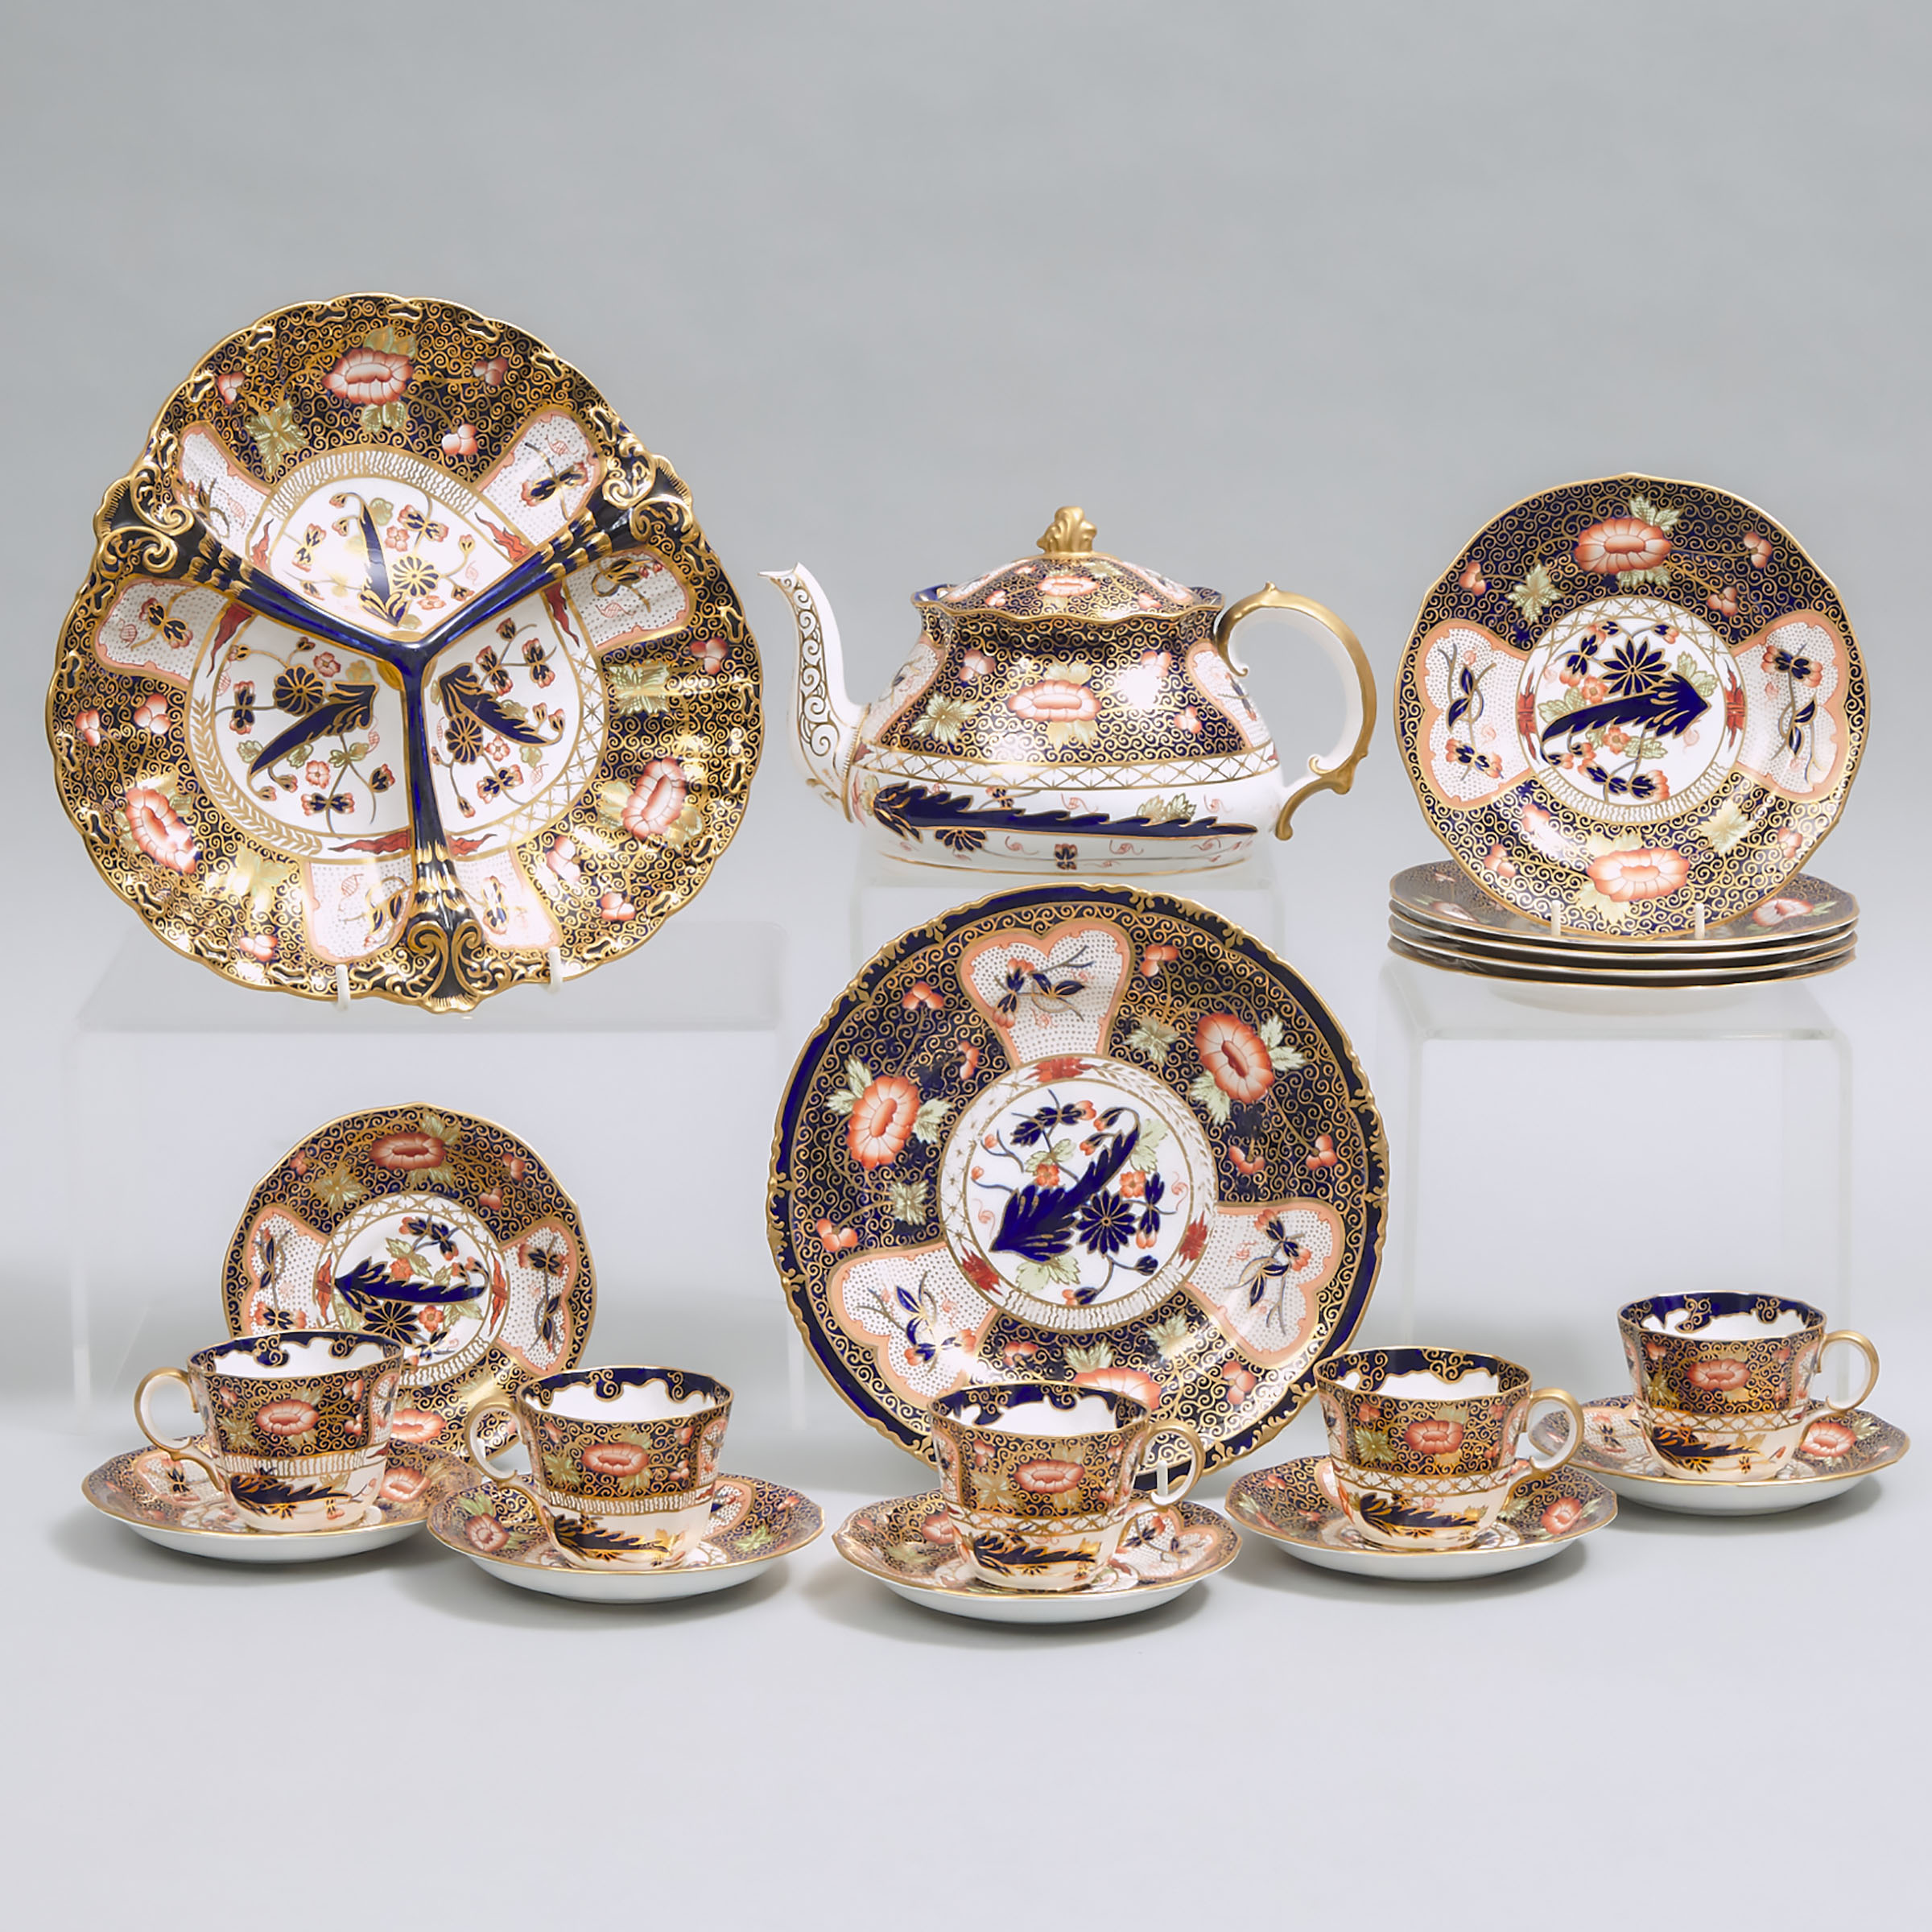 Royal Crown Derby 'Imari' (4591) Pattern Tea Service, 20th century